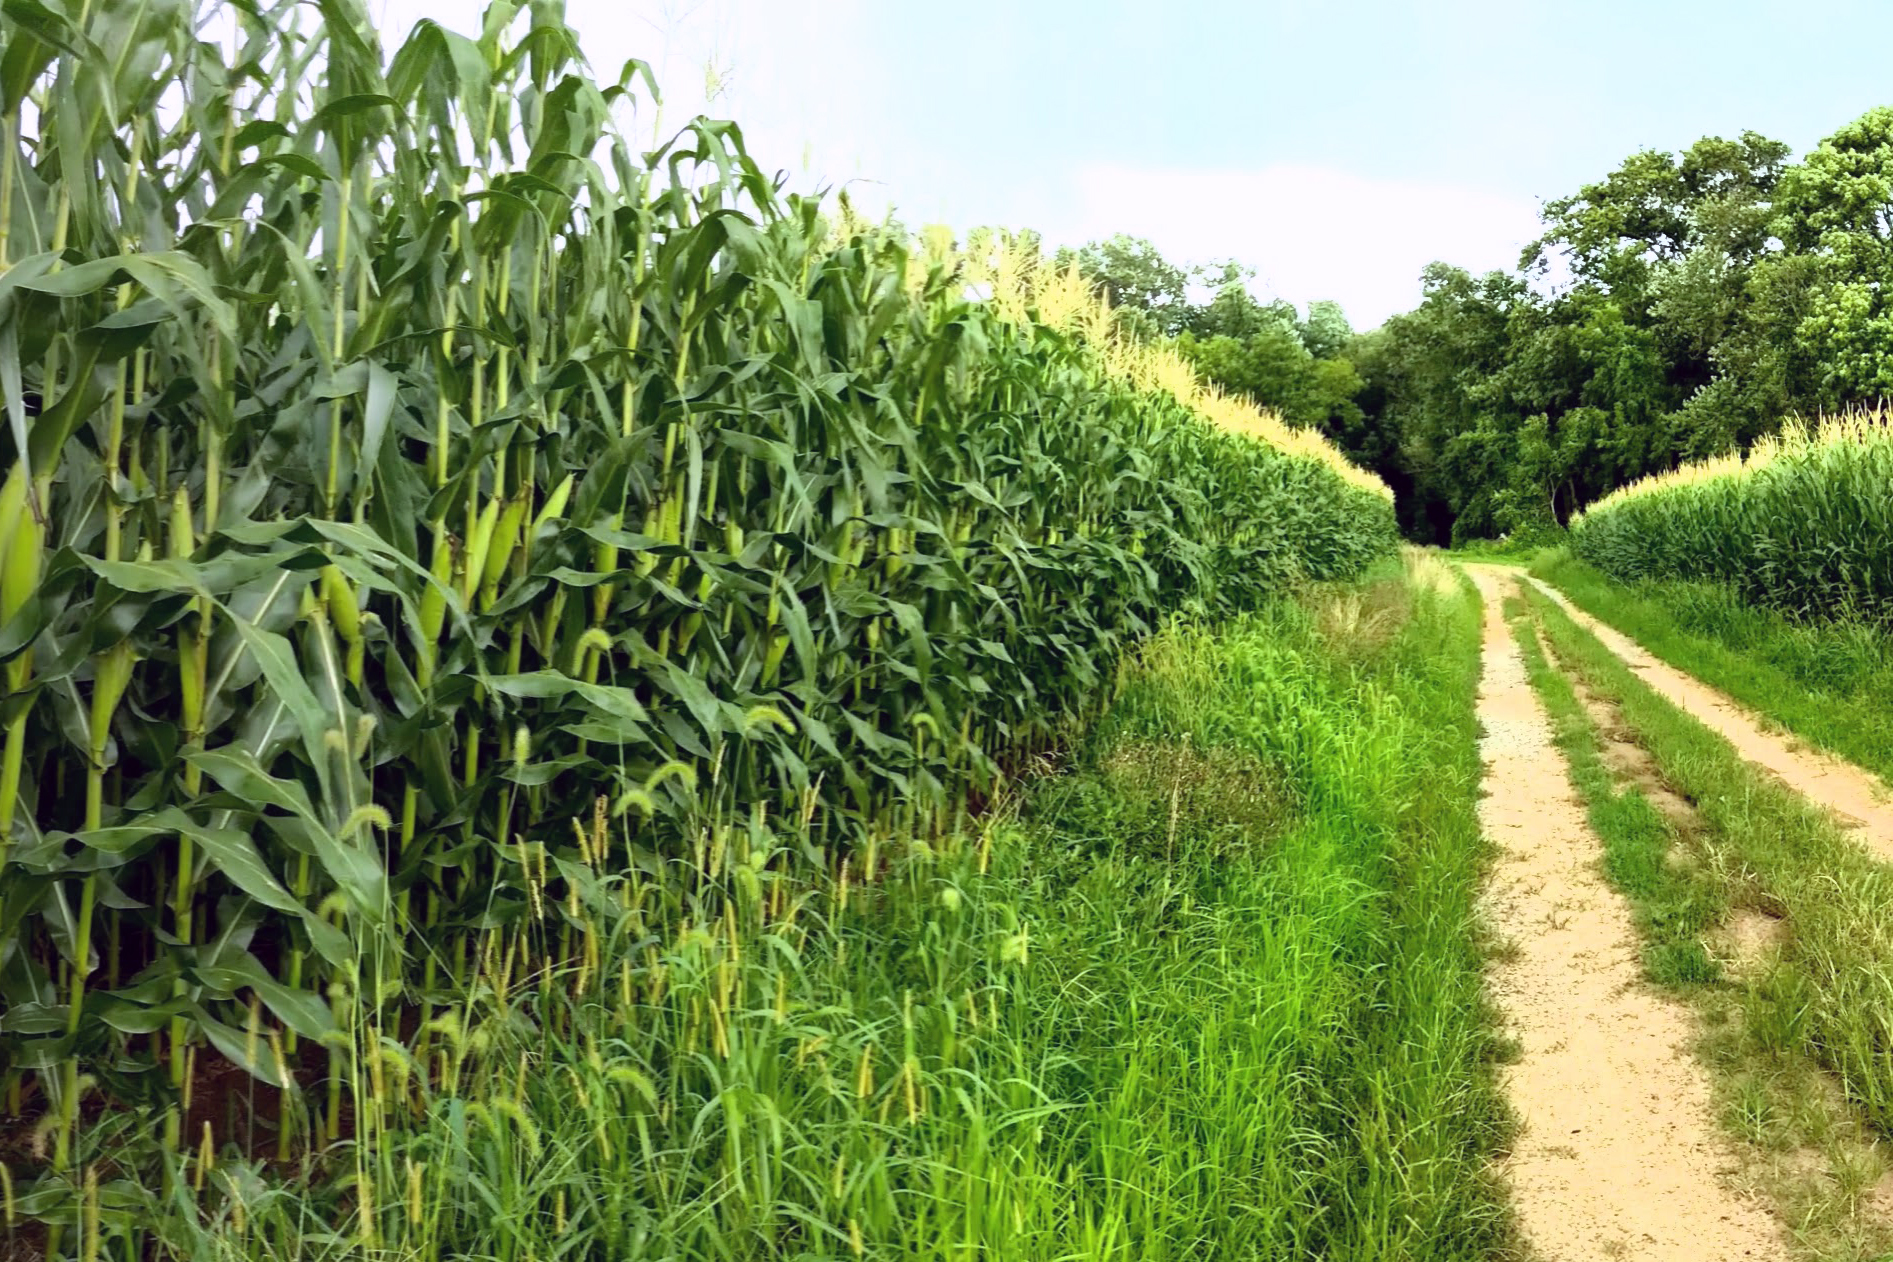 corn stalks on left, road on right